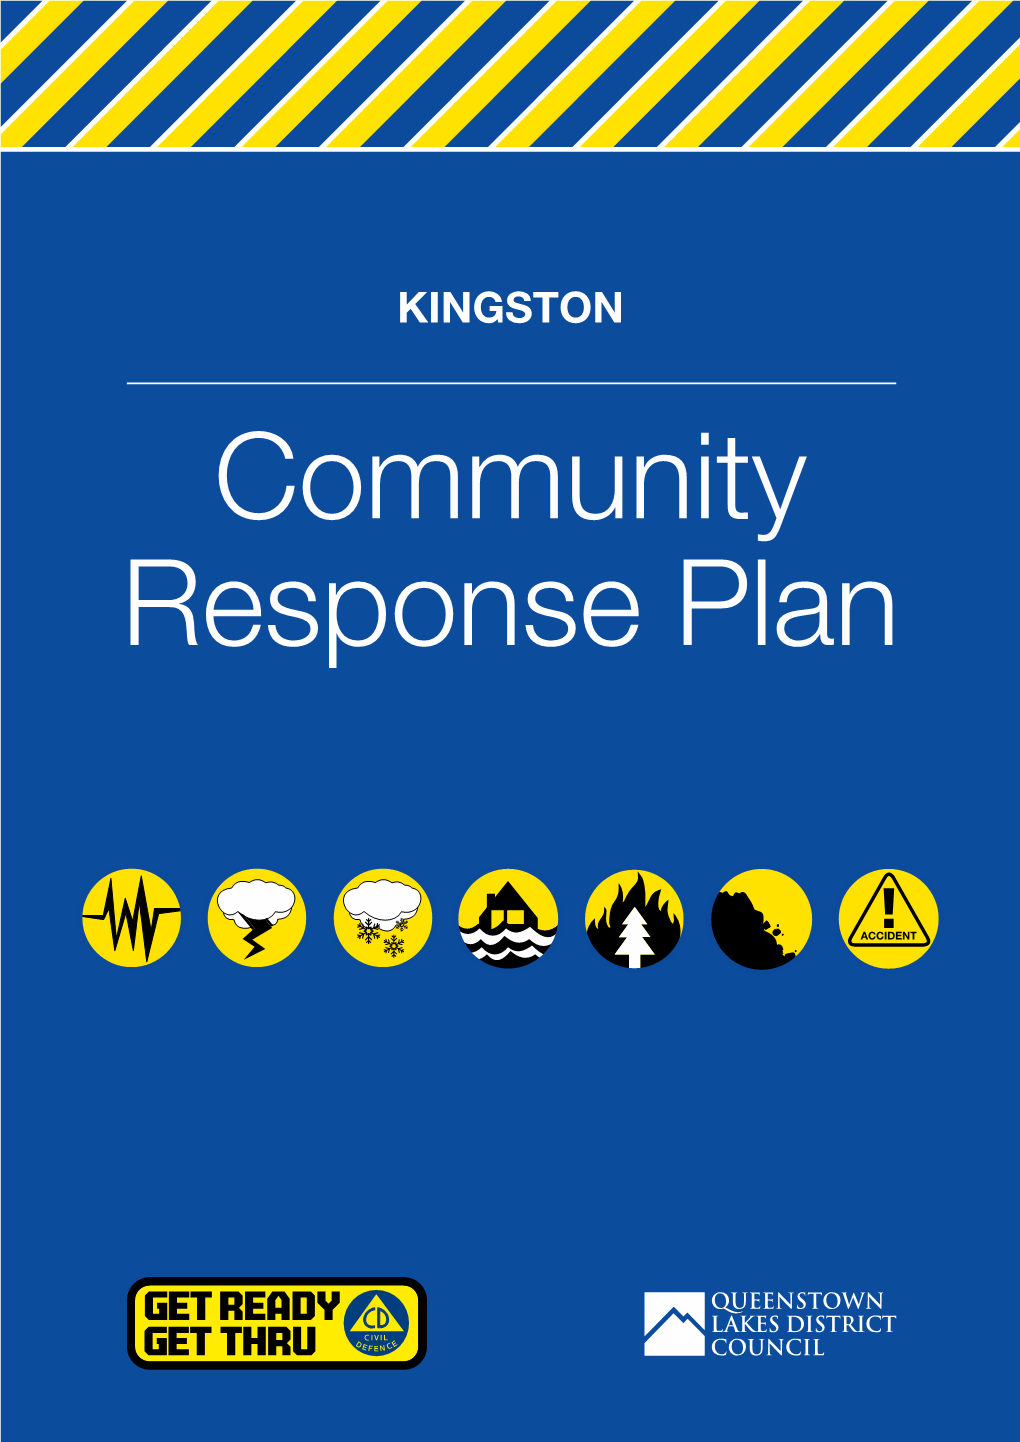 KINGSTON Community Response Plan Contents